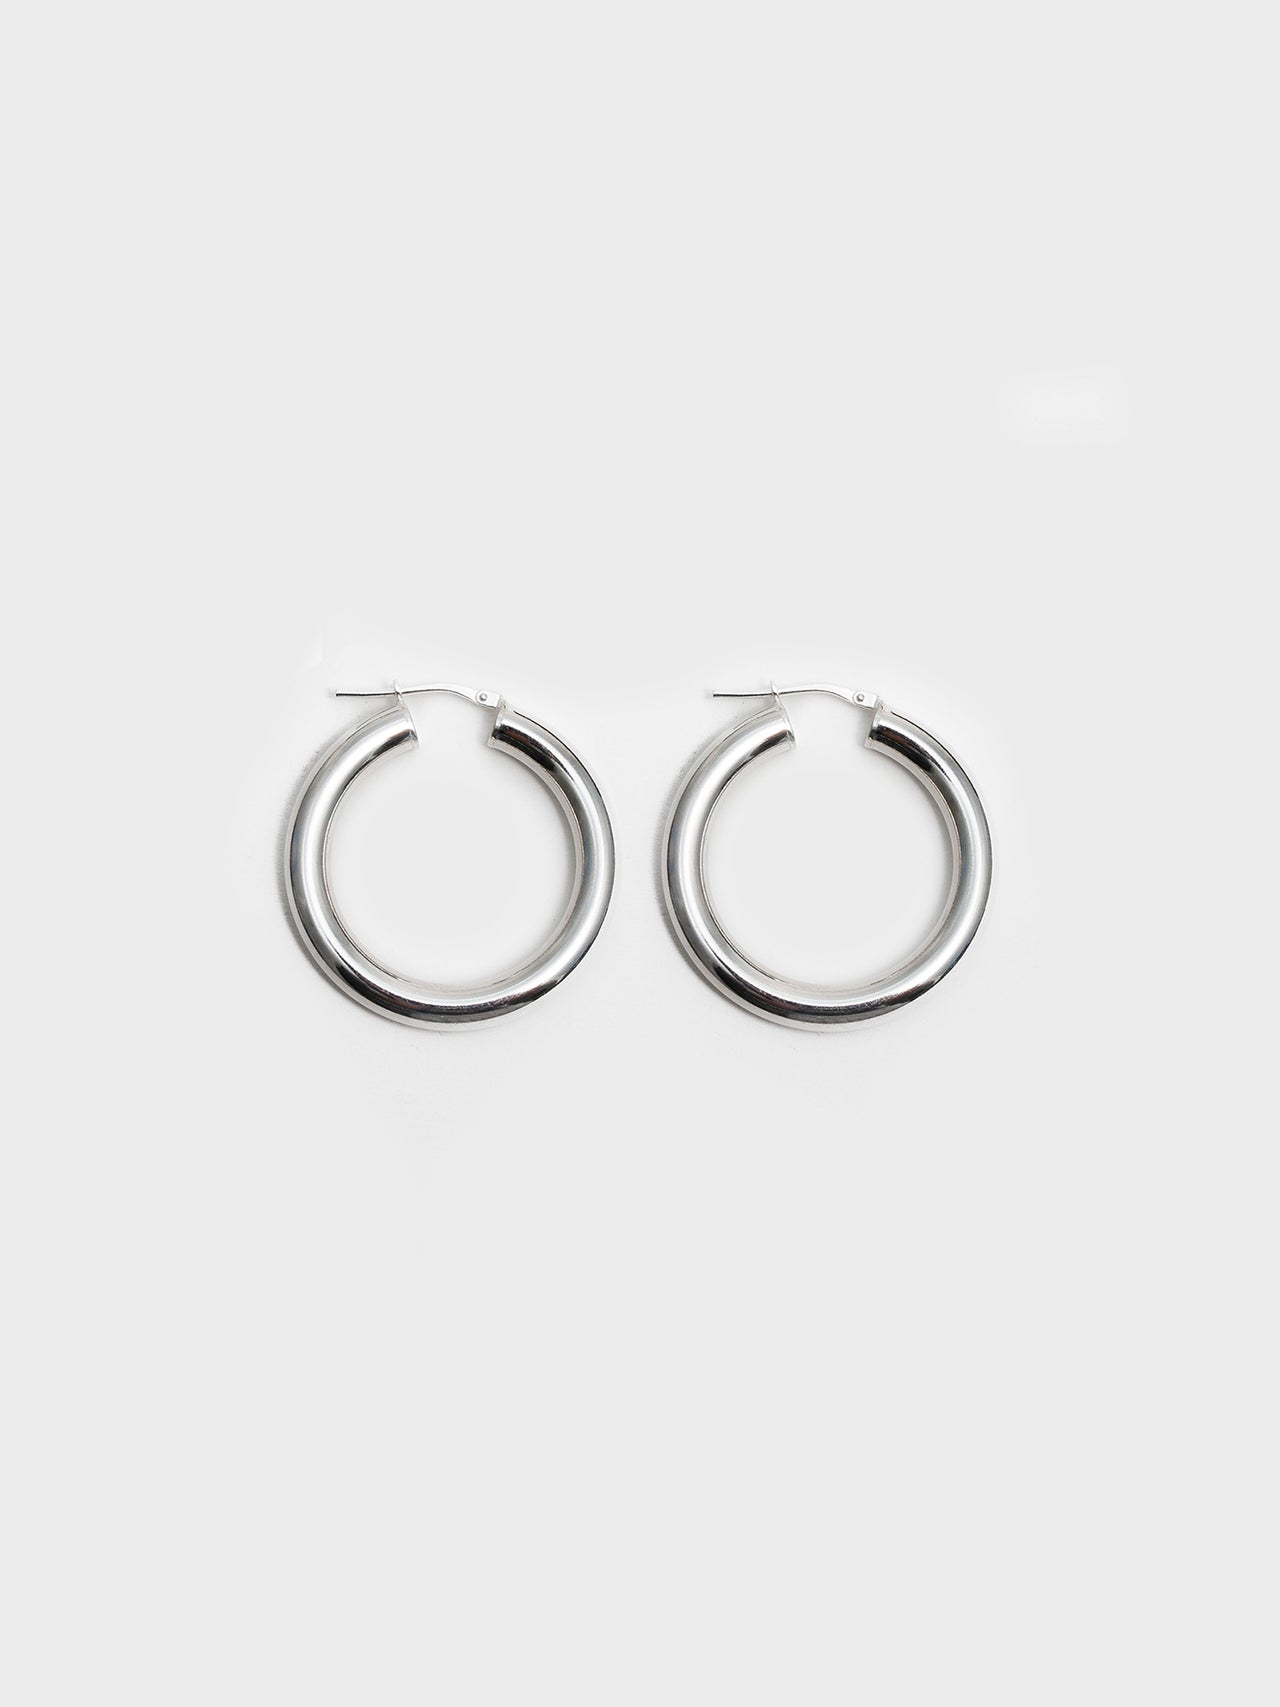 Product image of thick sterling silver Tru Hoop earrings.